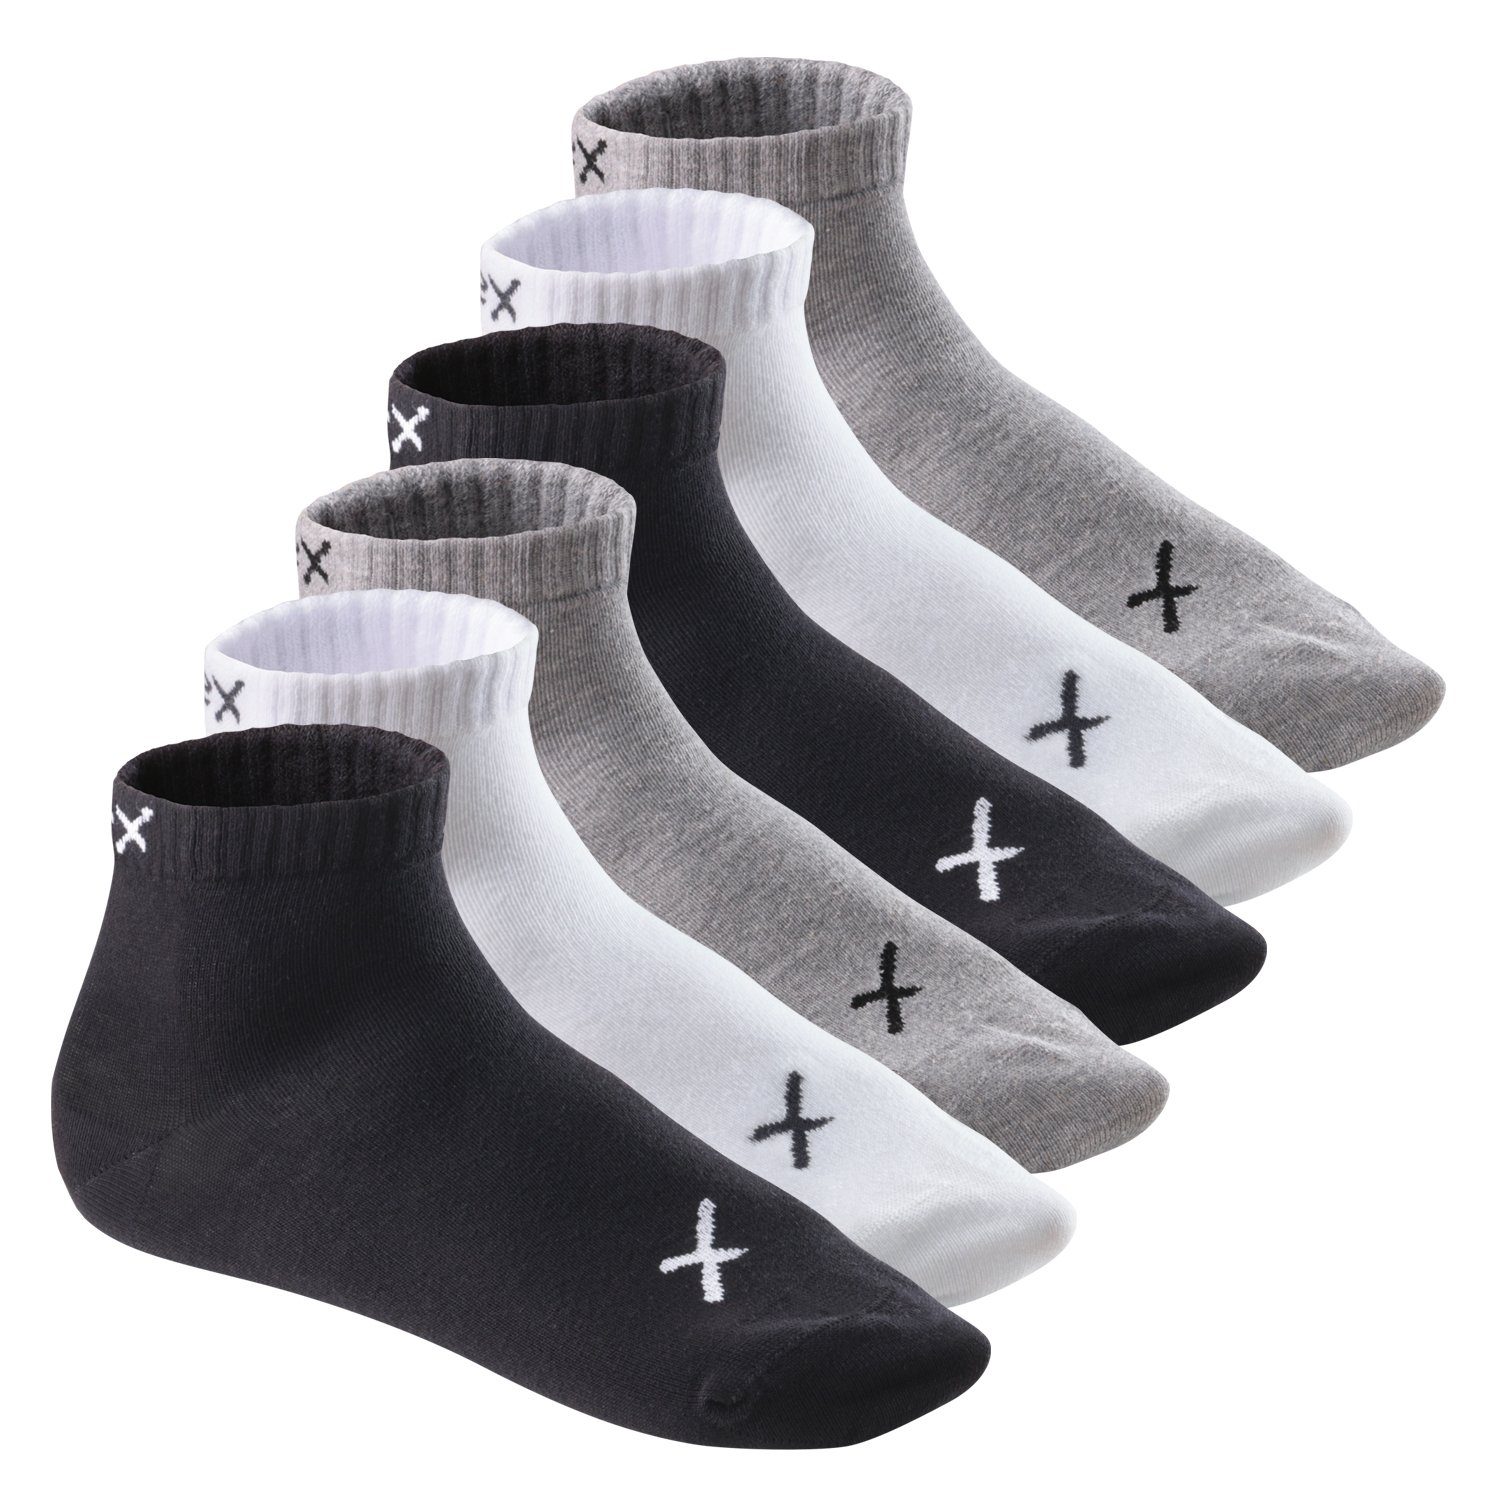 CFLEX Kurzsocken Lifestyle Kurzschaft Socken White Sneaker Herren / / (6 Paar) Black Damen & Grey für